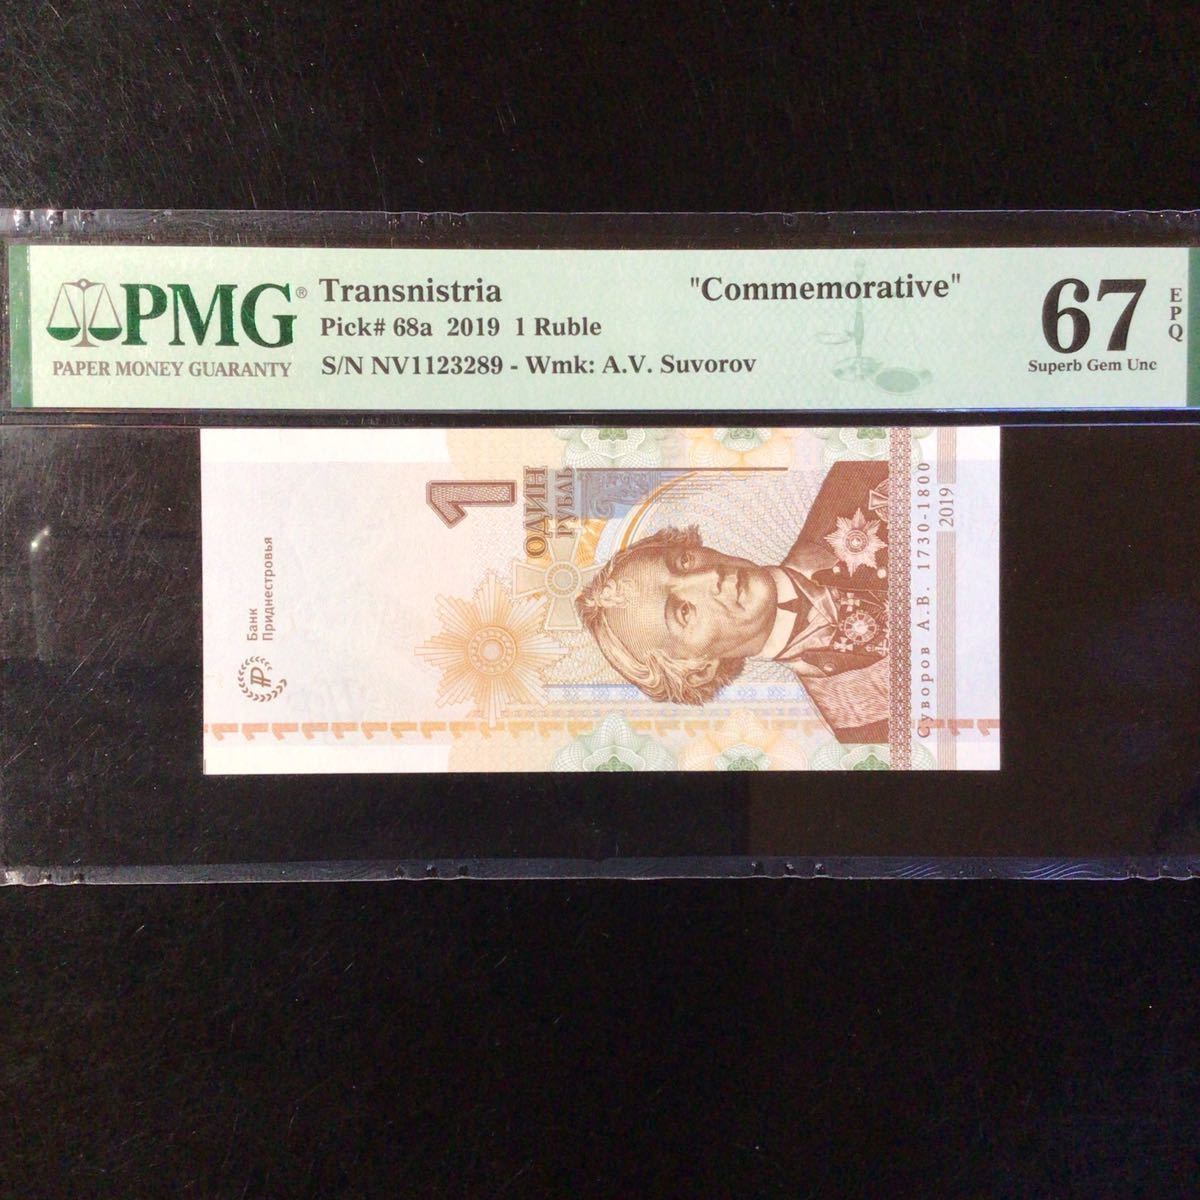 World Banknote Grading TRANSNISTRIA《Commemorative》1 Ruble【2019】『PMG Grading Superb Gem Uncirculated 67 EPQ』